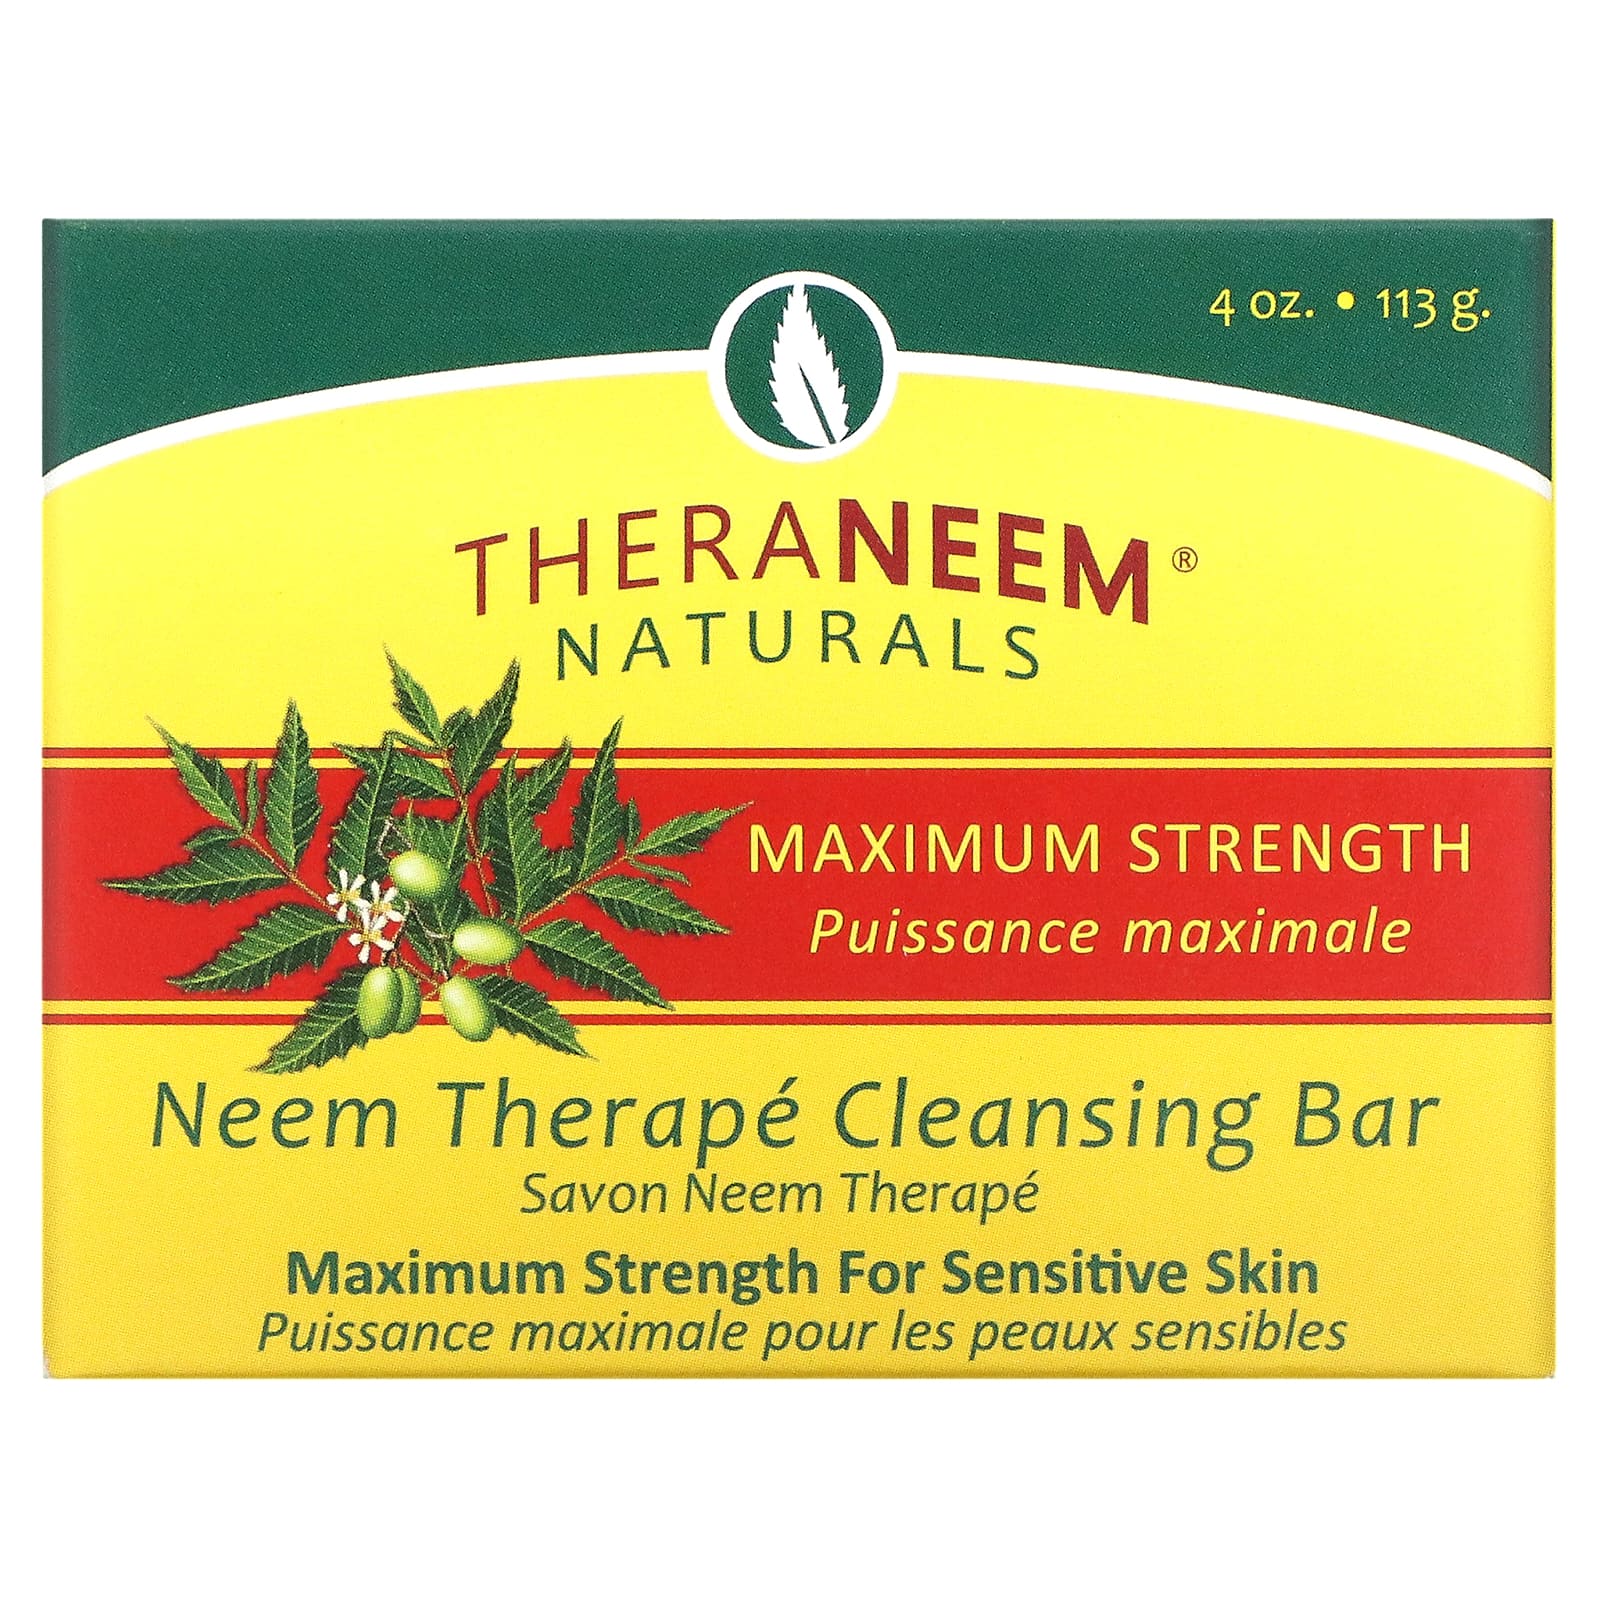 Organix South TheraNeem Organix Neem Therapy Cleansing Bar Maximum Strength 4 oz (113 g) цена и фото